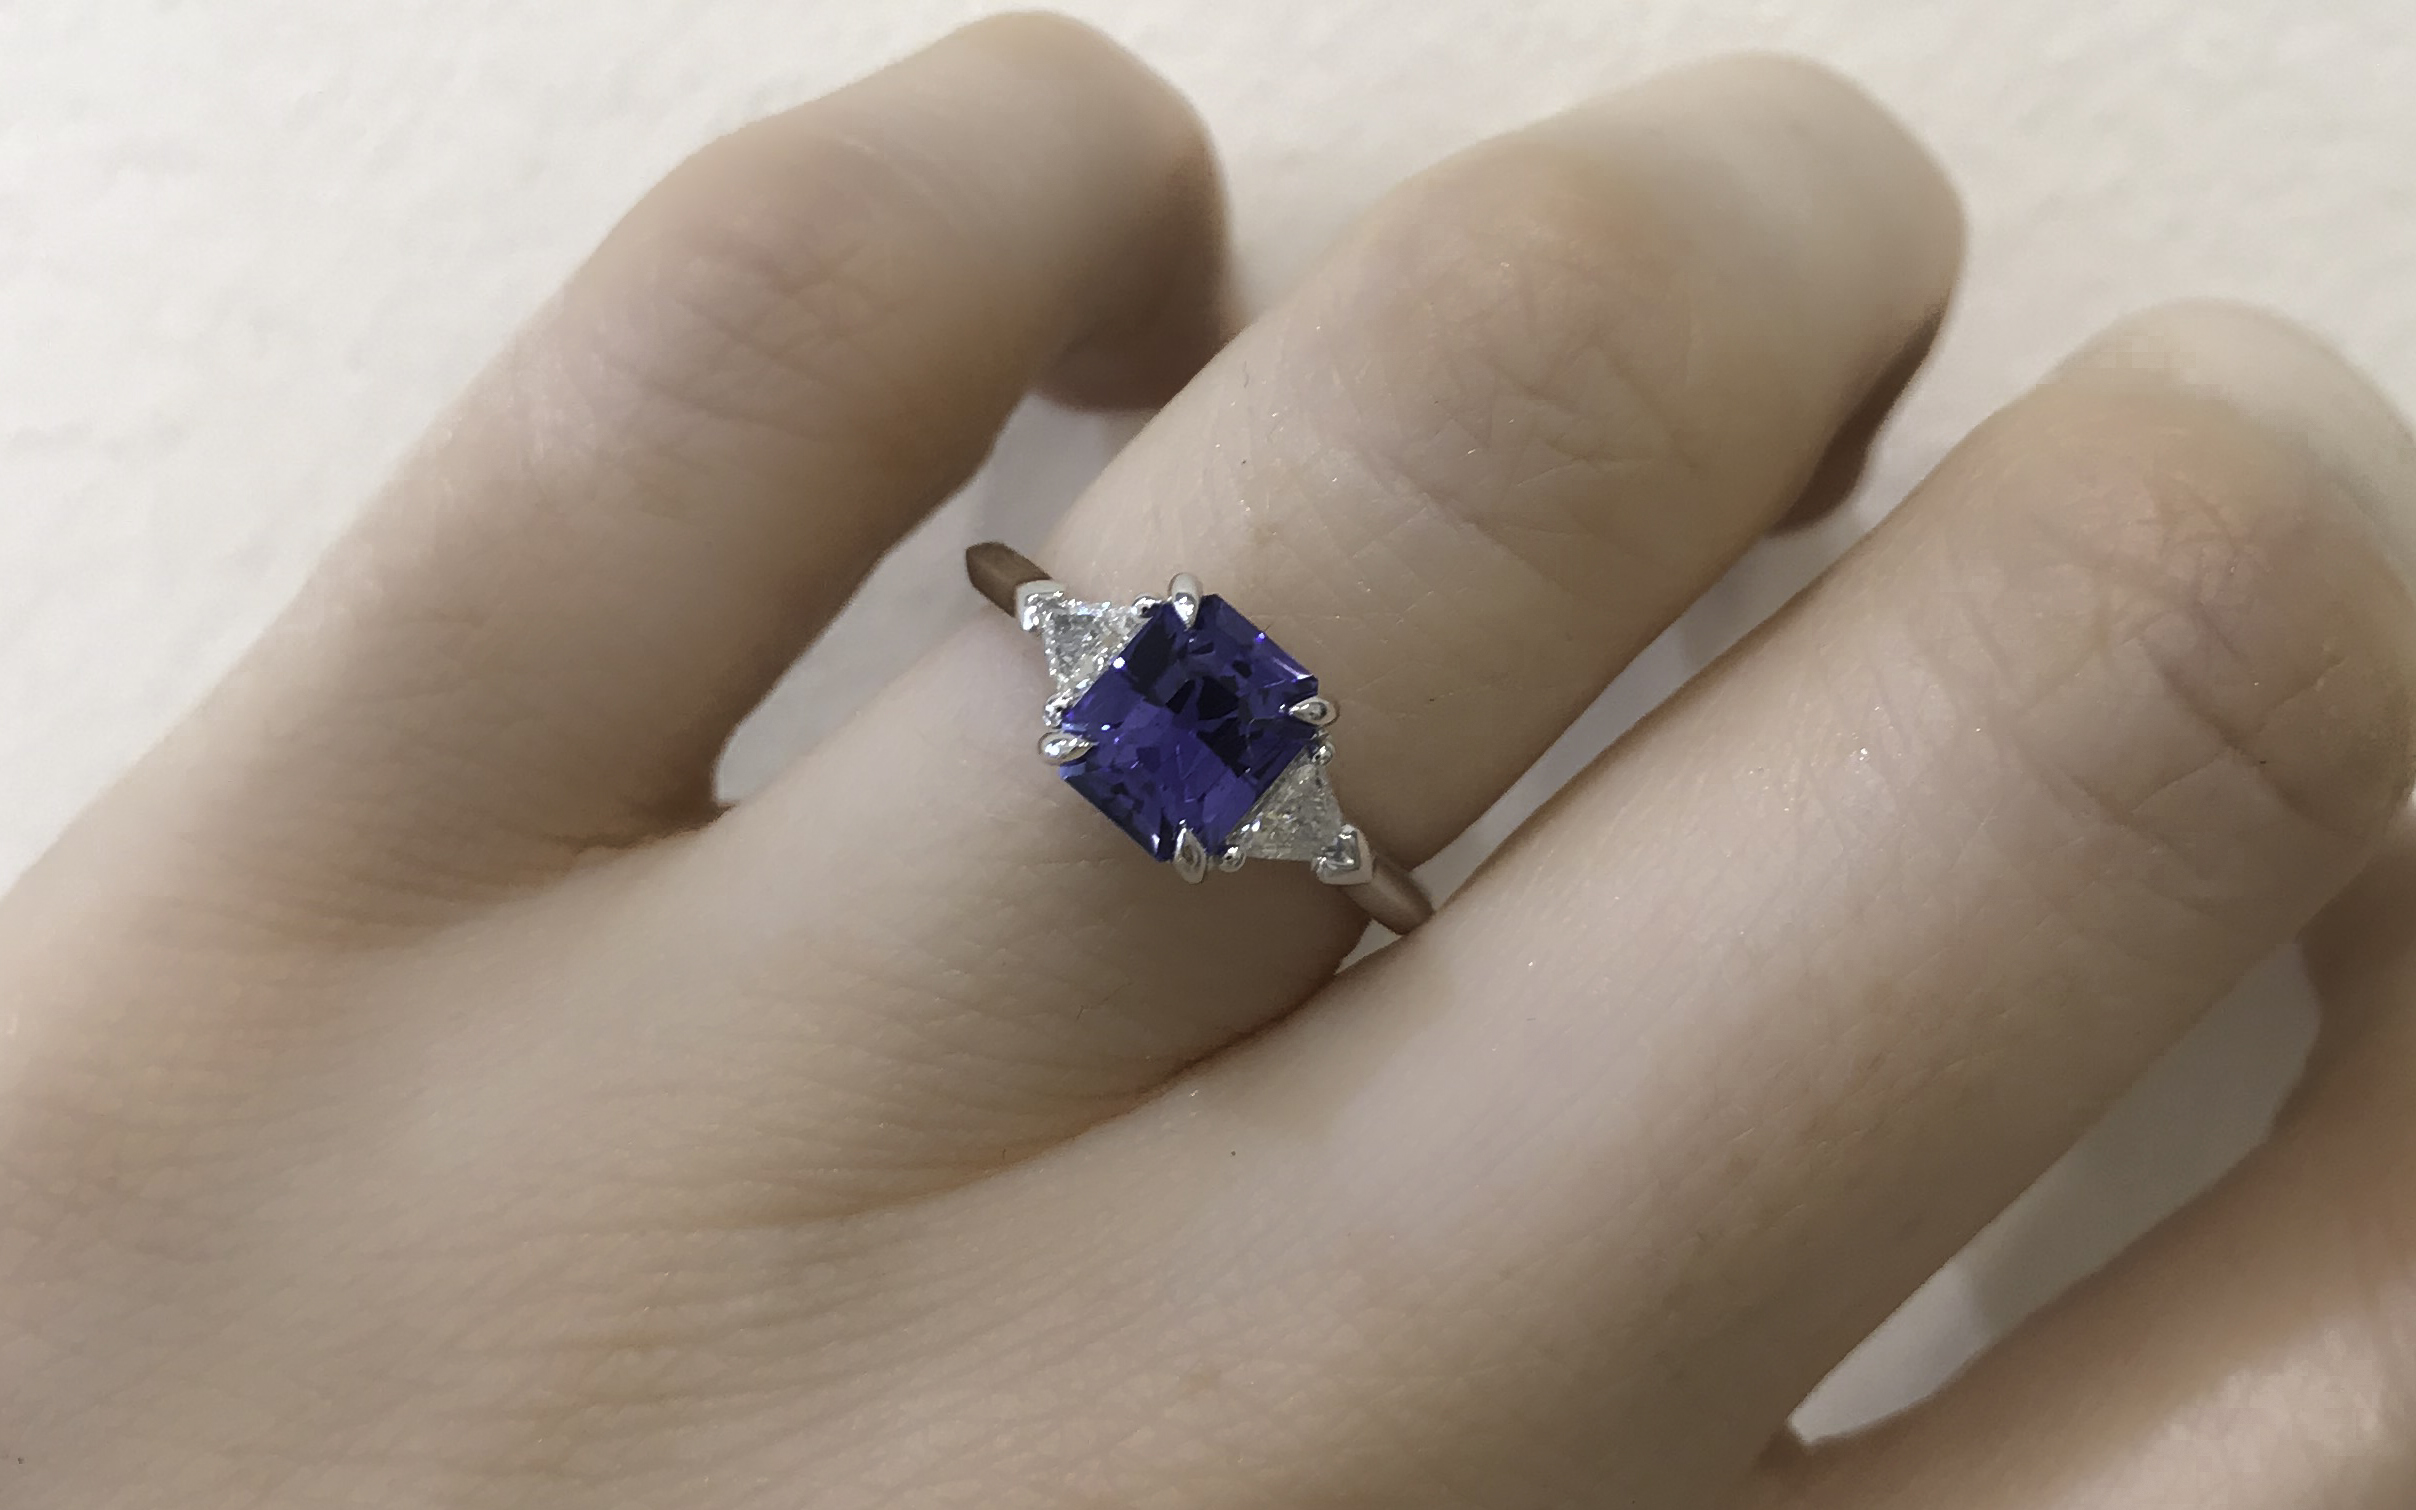 EMERALD-CUT BLUE CEYLON SAPPHIRE AND DIAMOND ENGAGEMENT RING